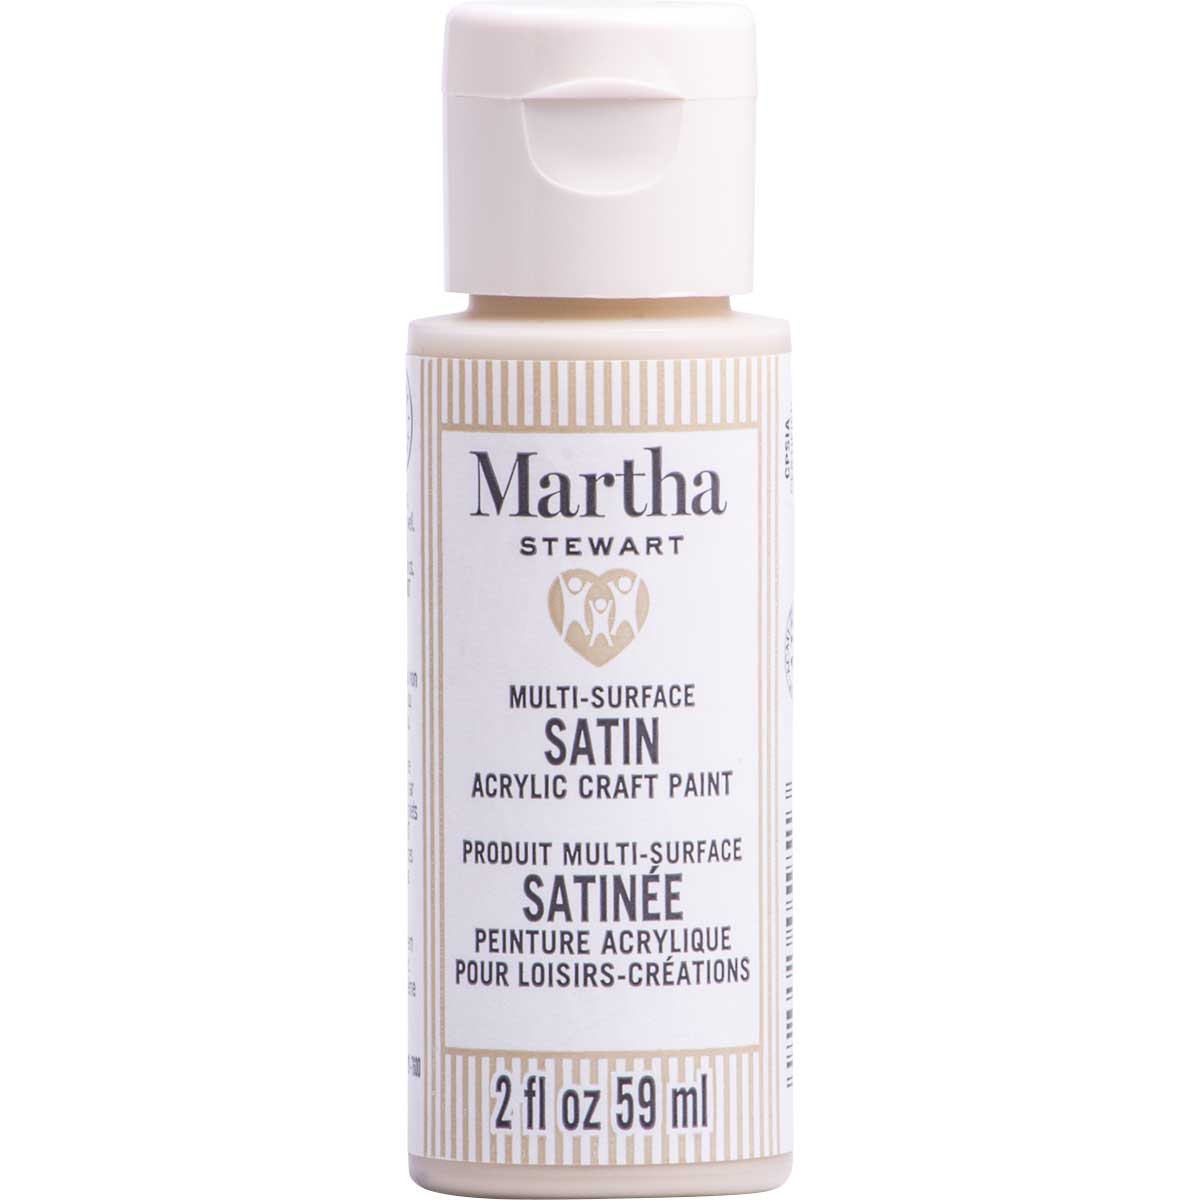 Martha Stewart ® Multi-Surface Satin Acrylic Craft Paint CPSIA - Sting Ray Gray, 2 oz. - 5951